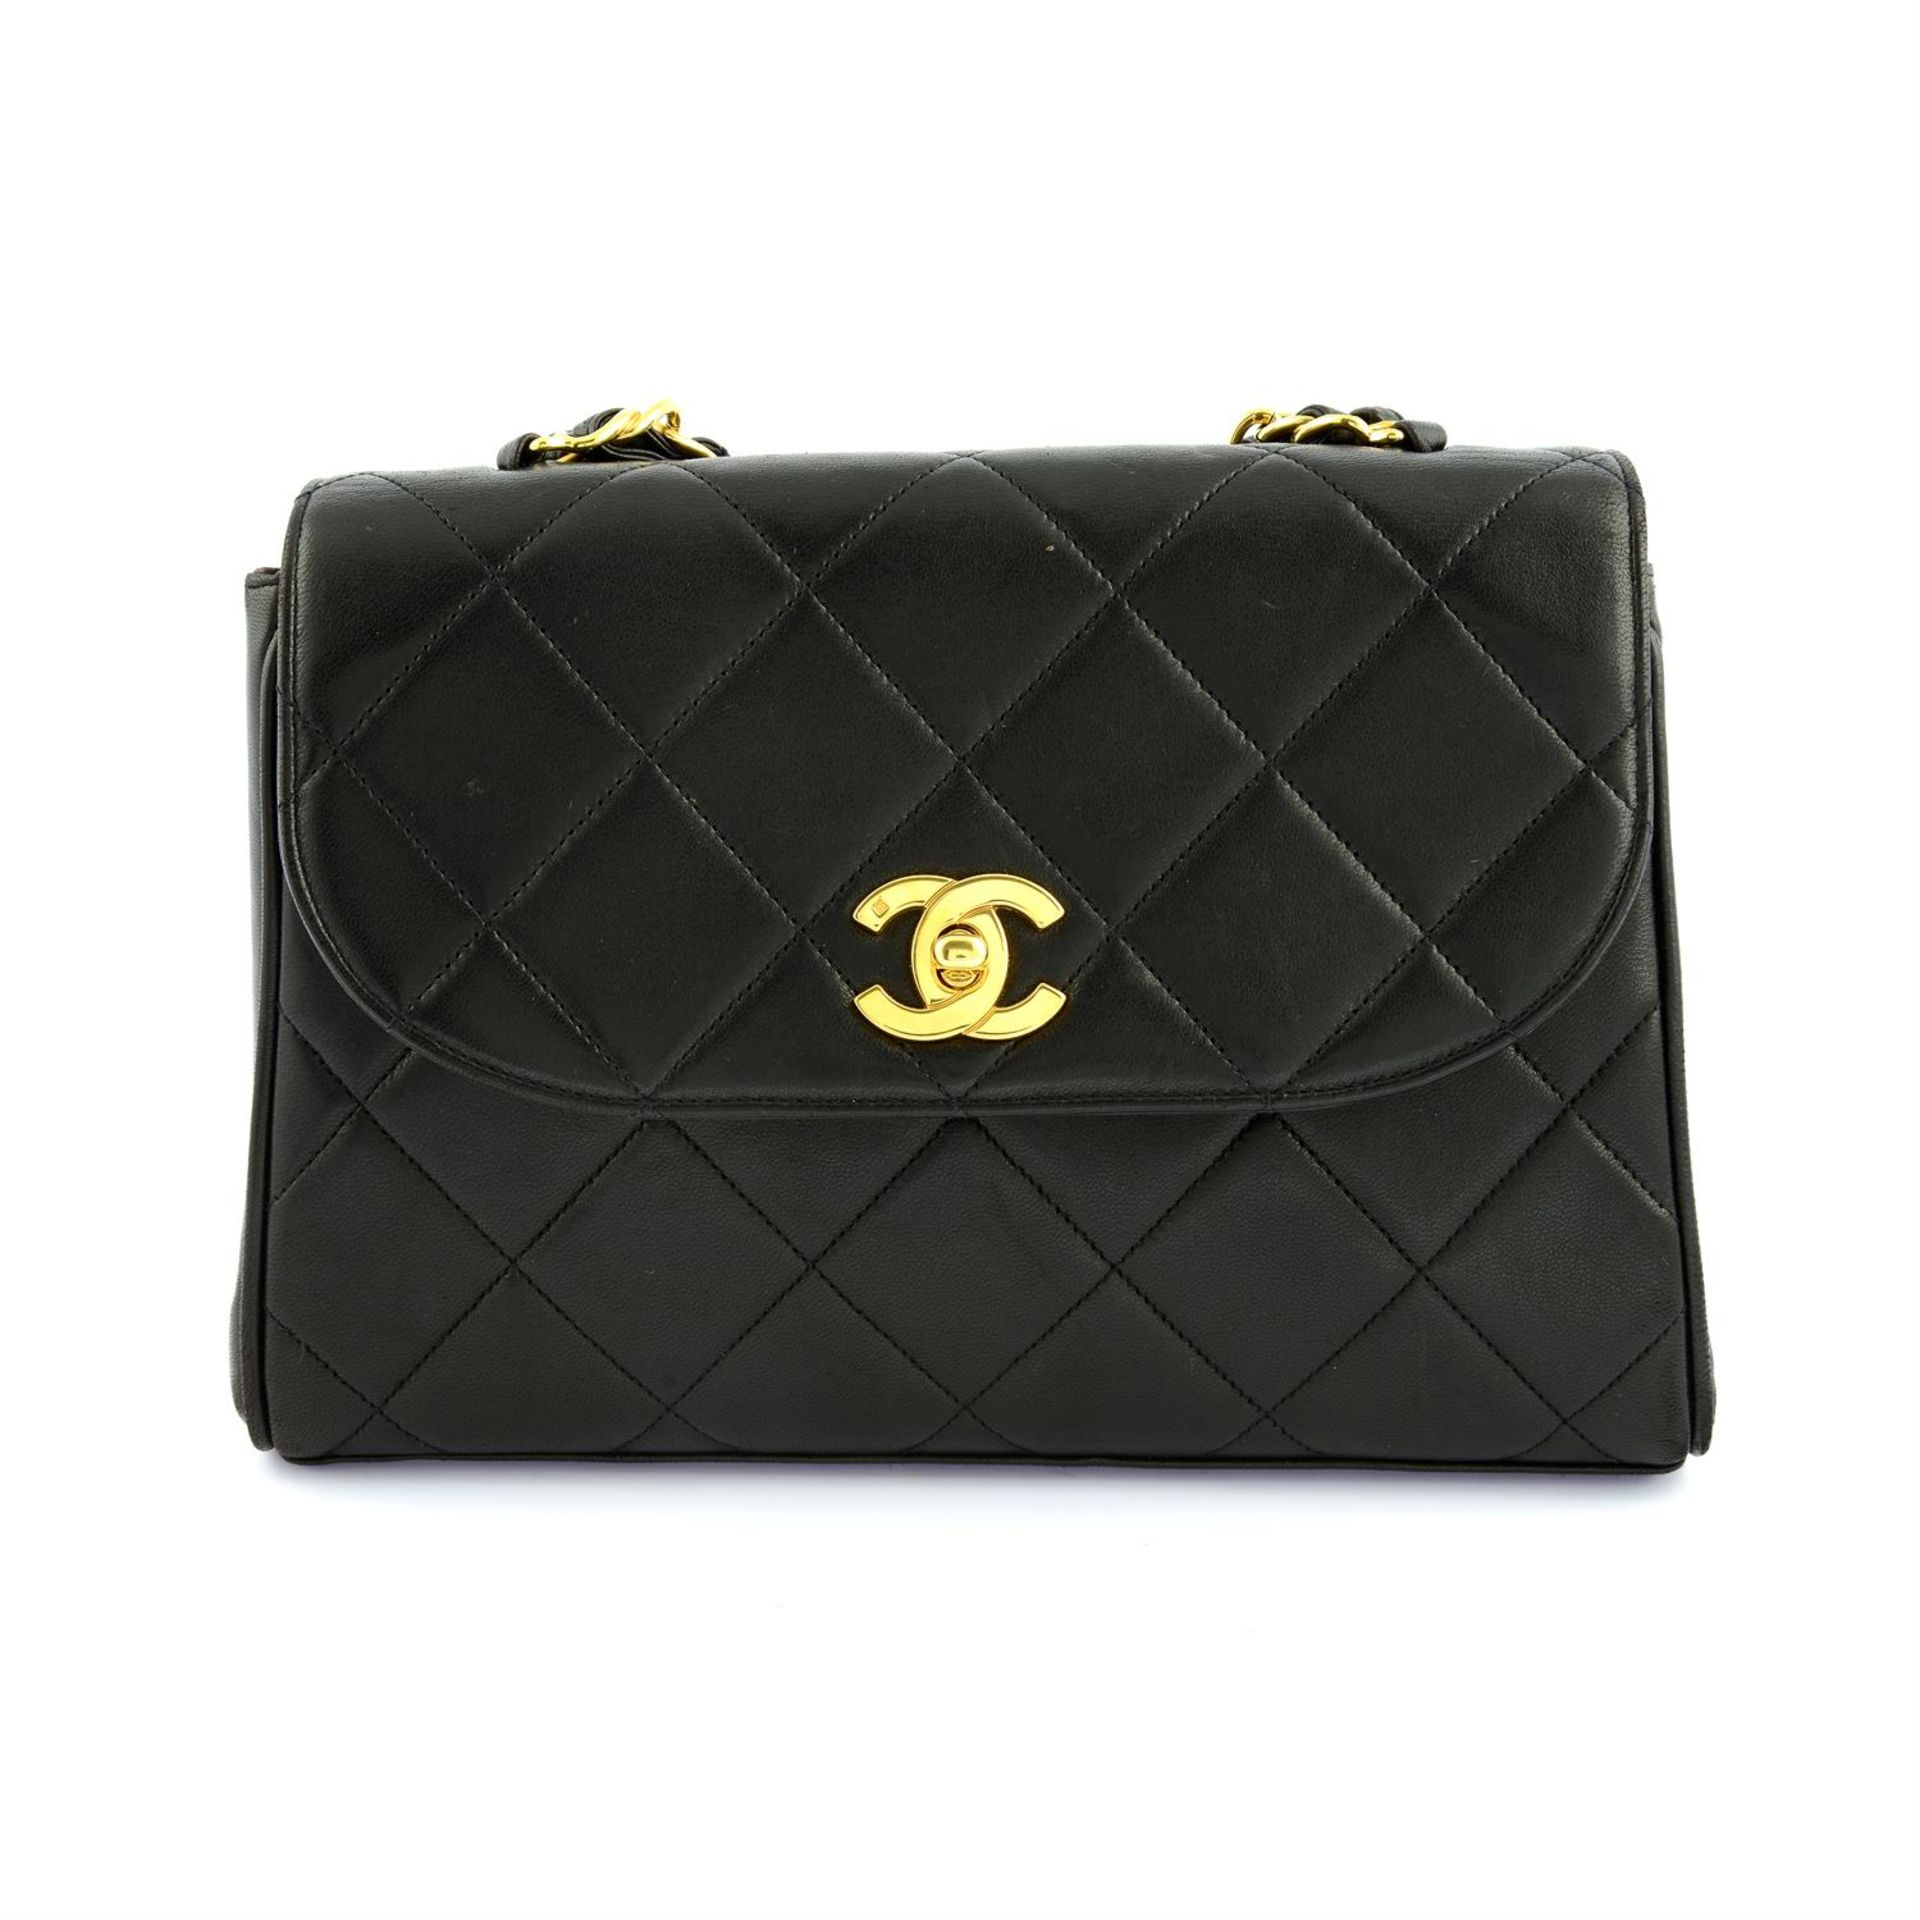 CHANEL - a black lambskin leather top handle single flap handbag.